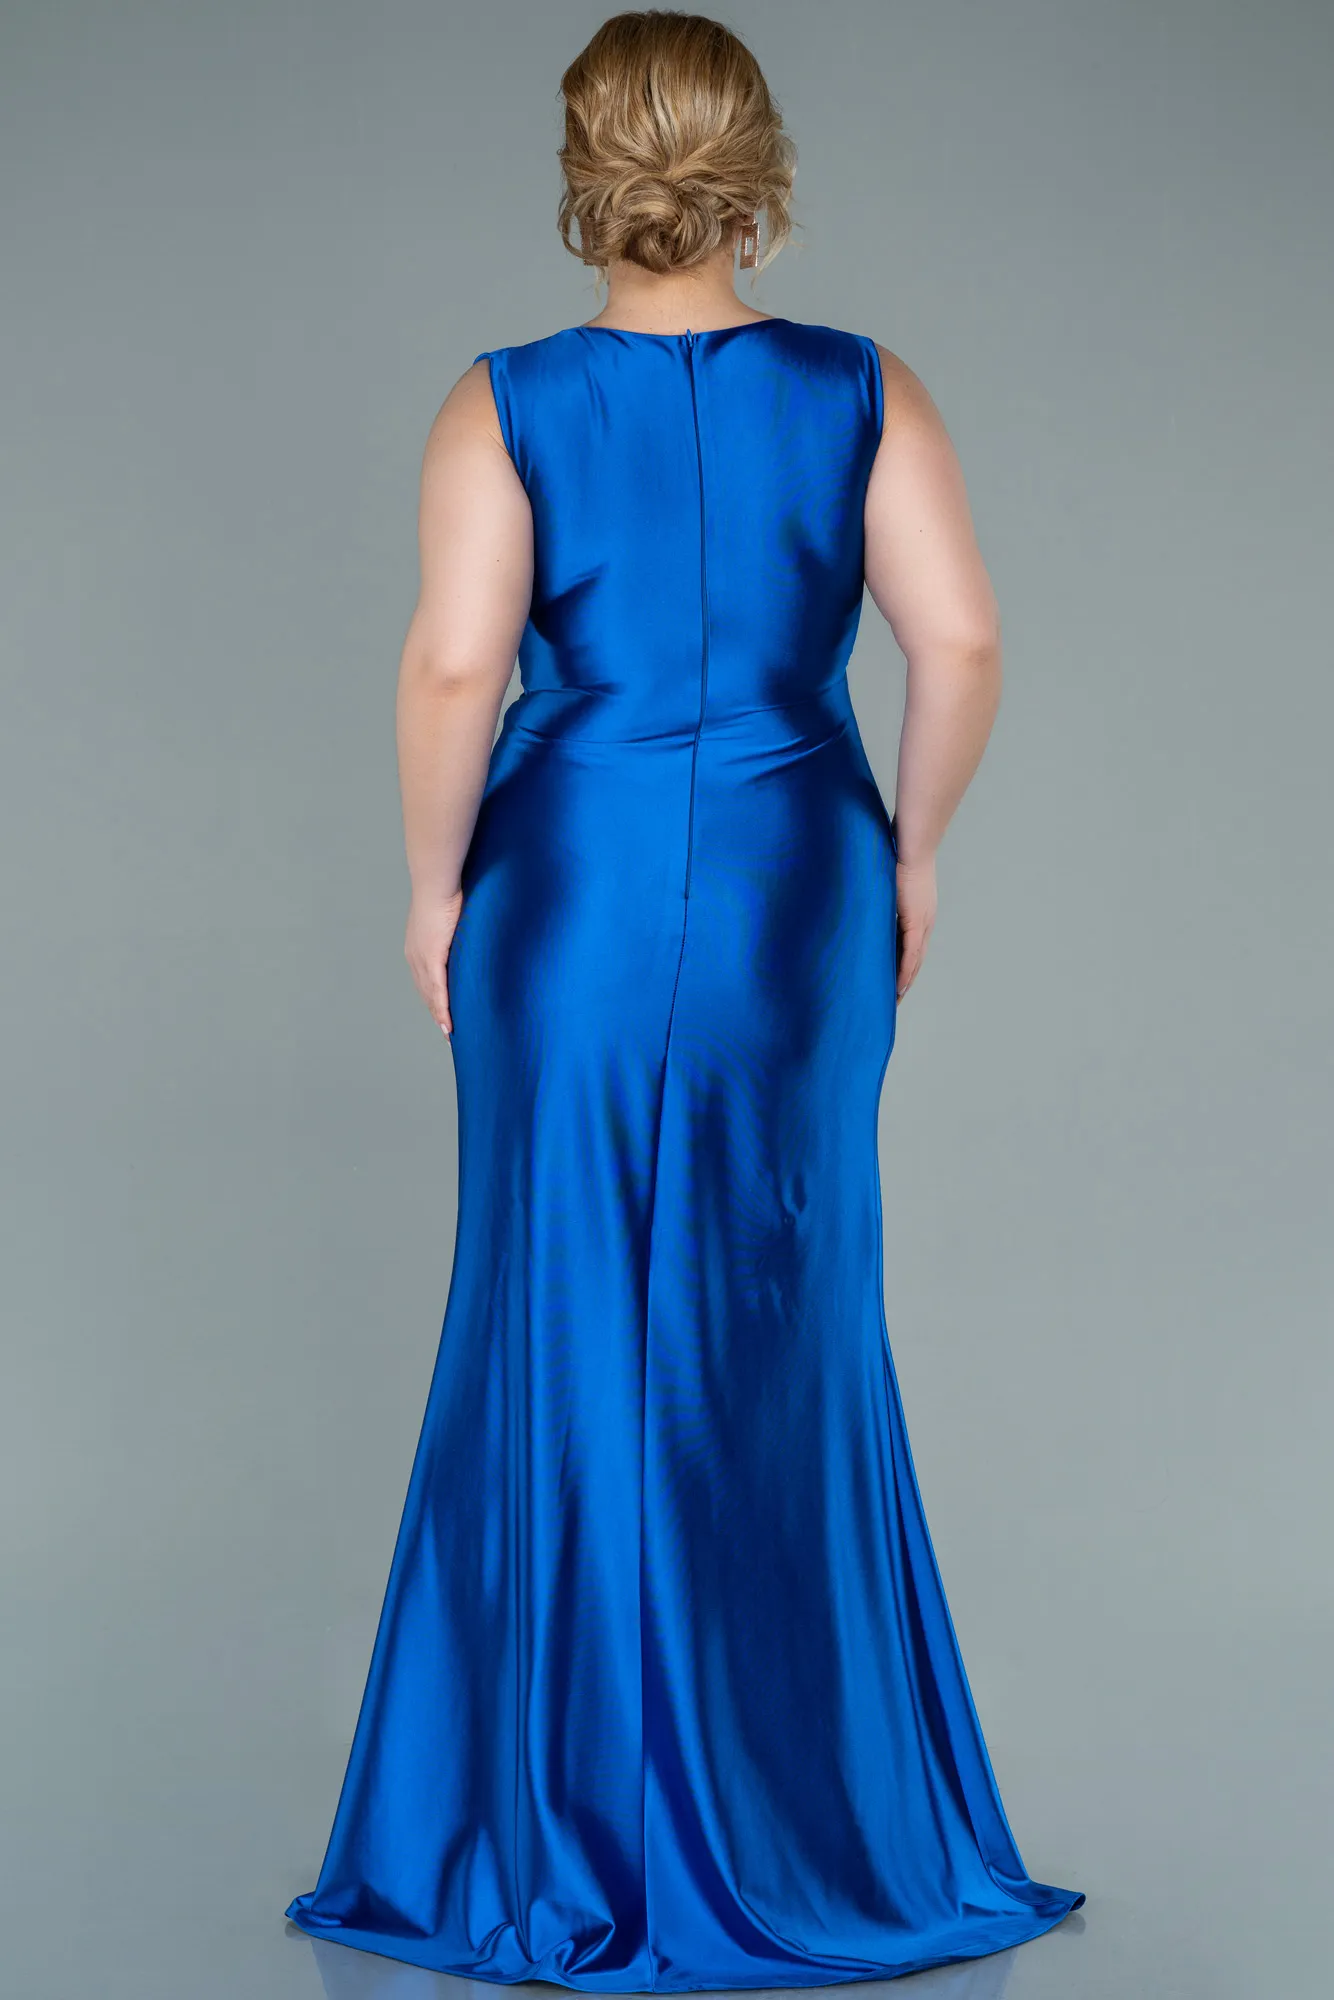 Sax Blue-Long Plus Size Evening Dress ABU2366